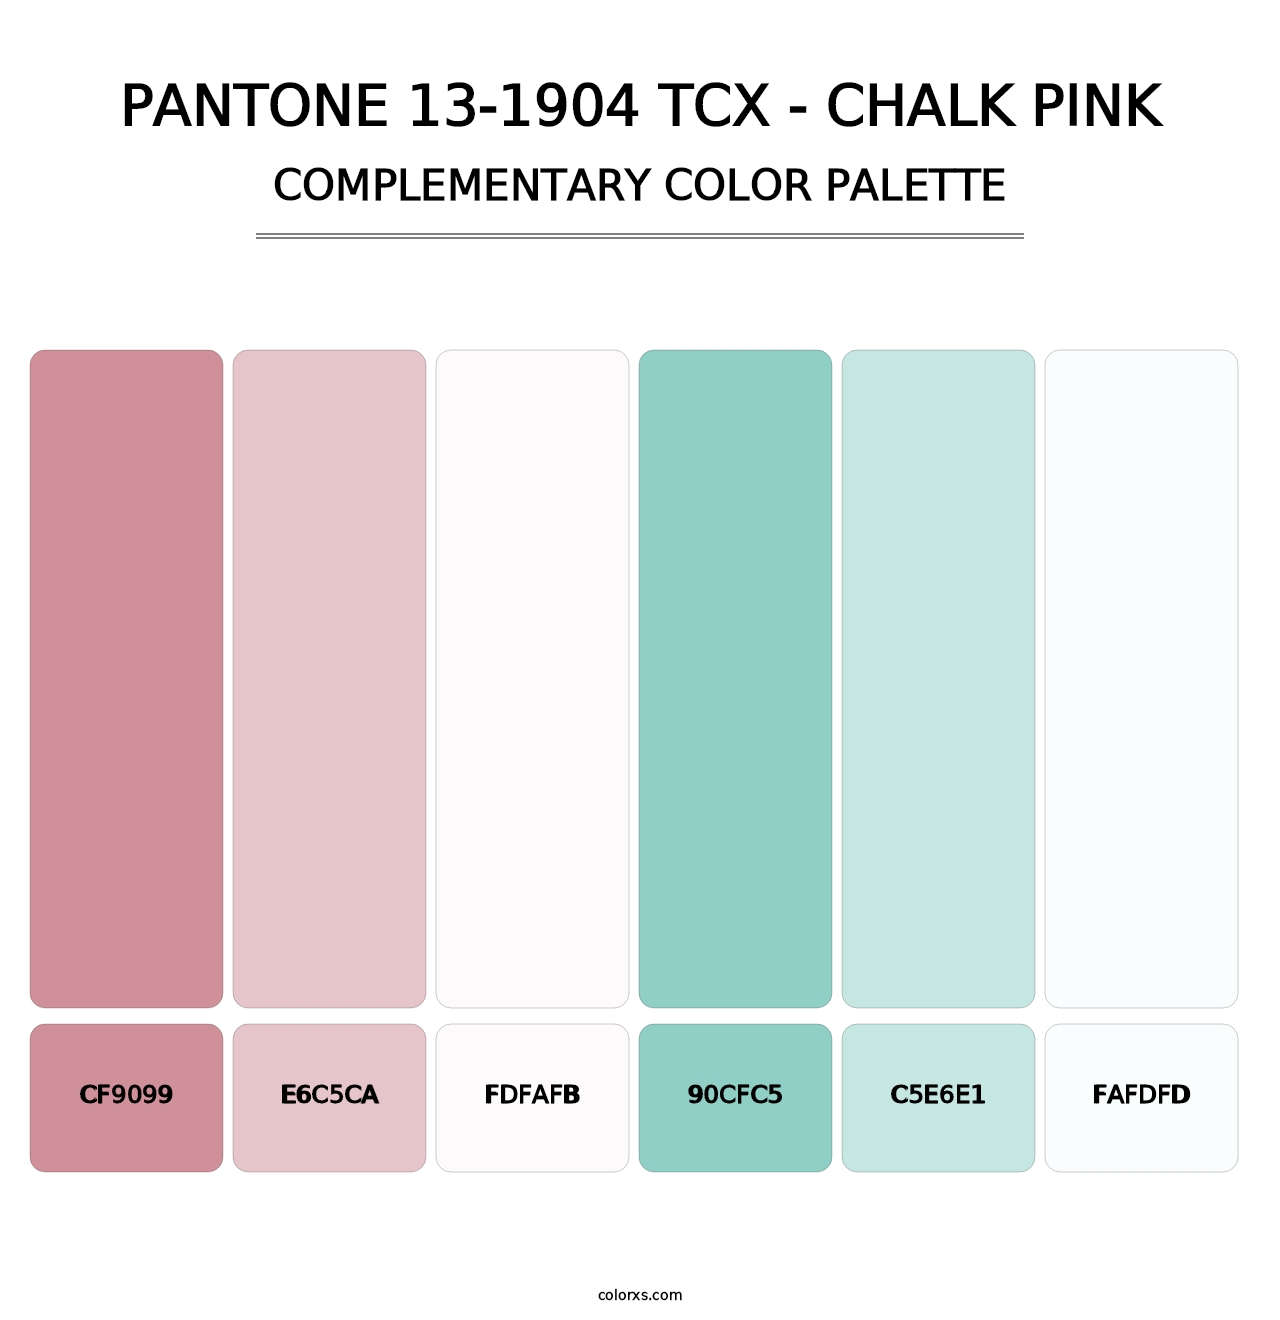 PANTONE 13-1904 TCX - Chalk Pink - Complementary Color Palette